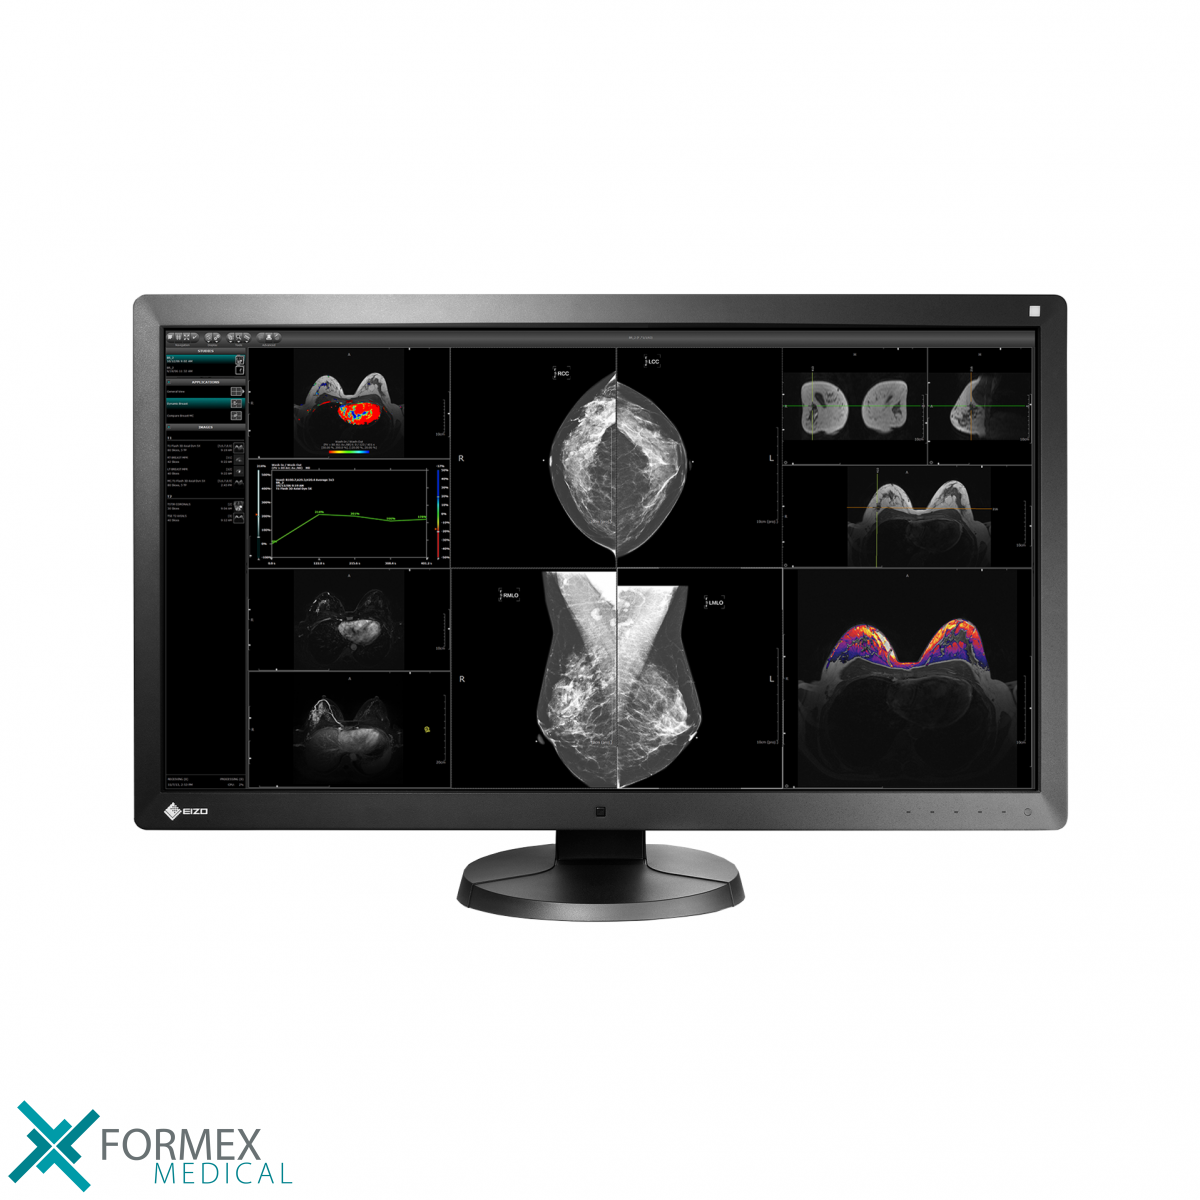 EIZO RX370 RadiForce, medical displays, medische schermen, eizo medical monitor, medische monitoren, eizo medical, medische beeldschermen, diagnostische monitoren, diagnostiek monitoren, eizo monitor